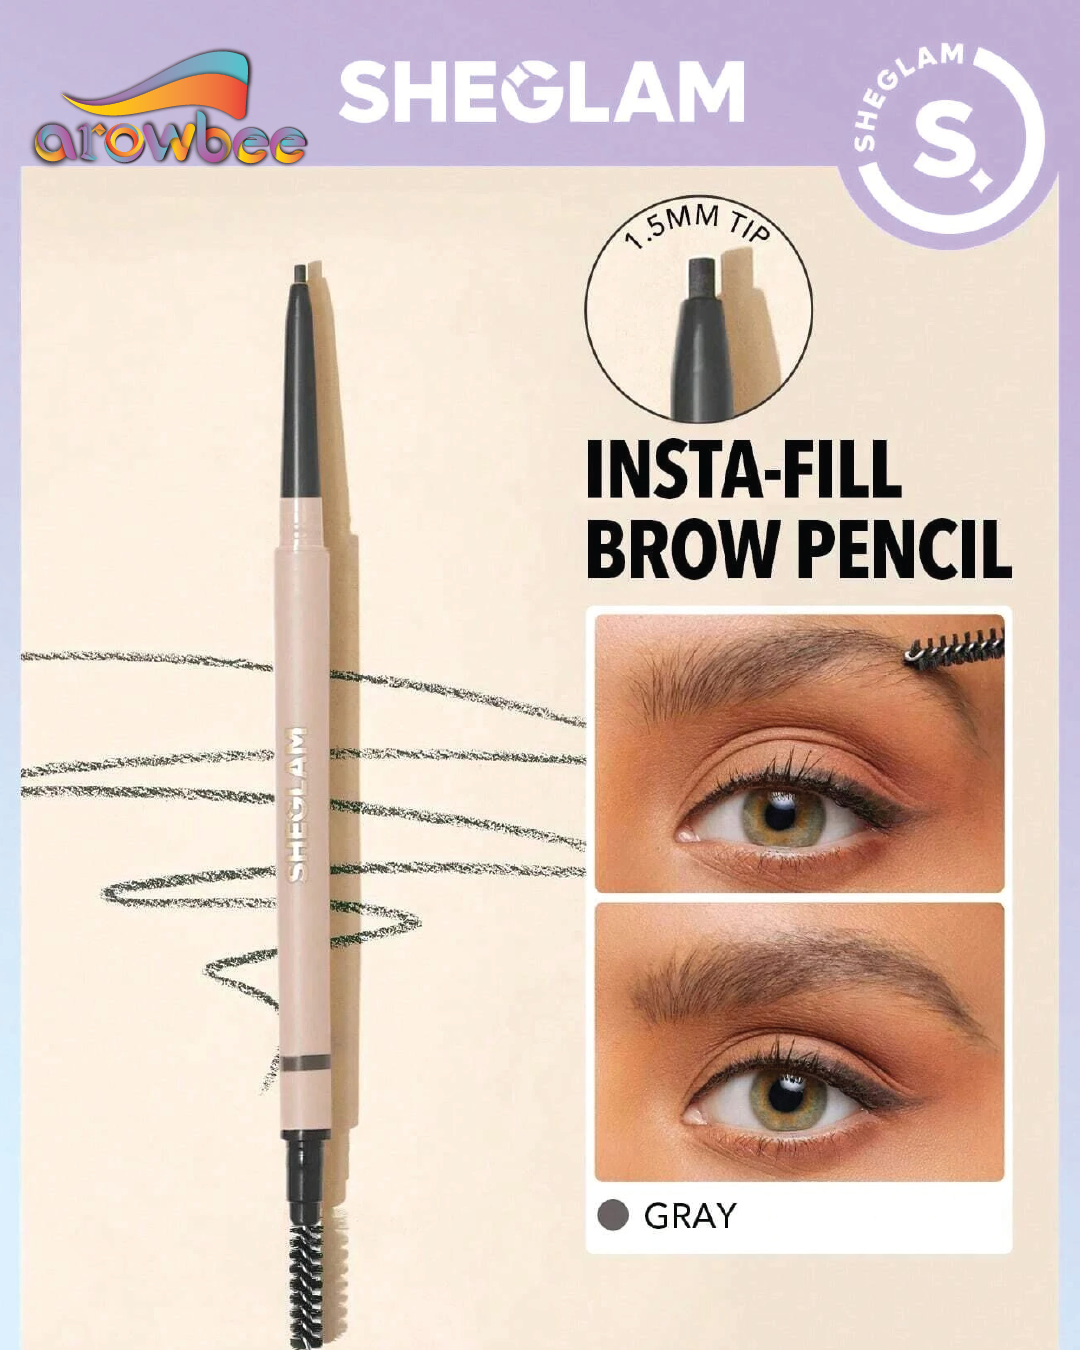 SHEGLAM Insta-fill Brow Pencil